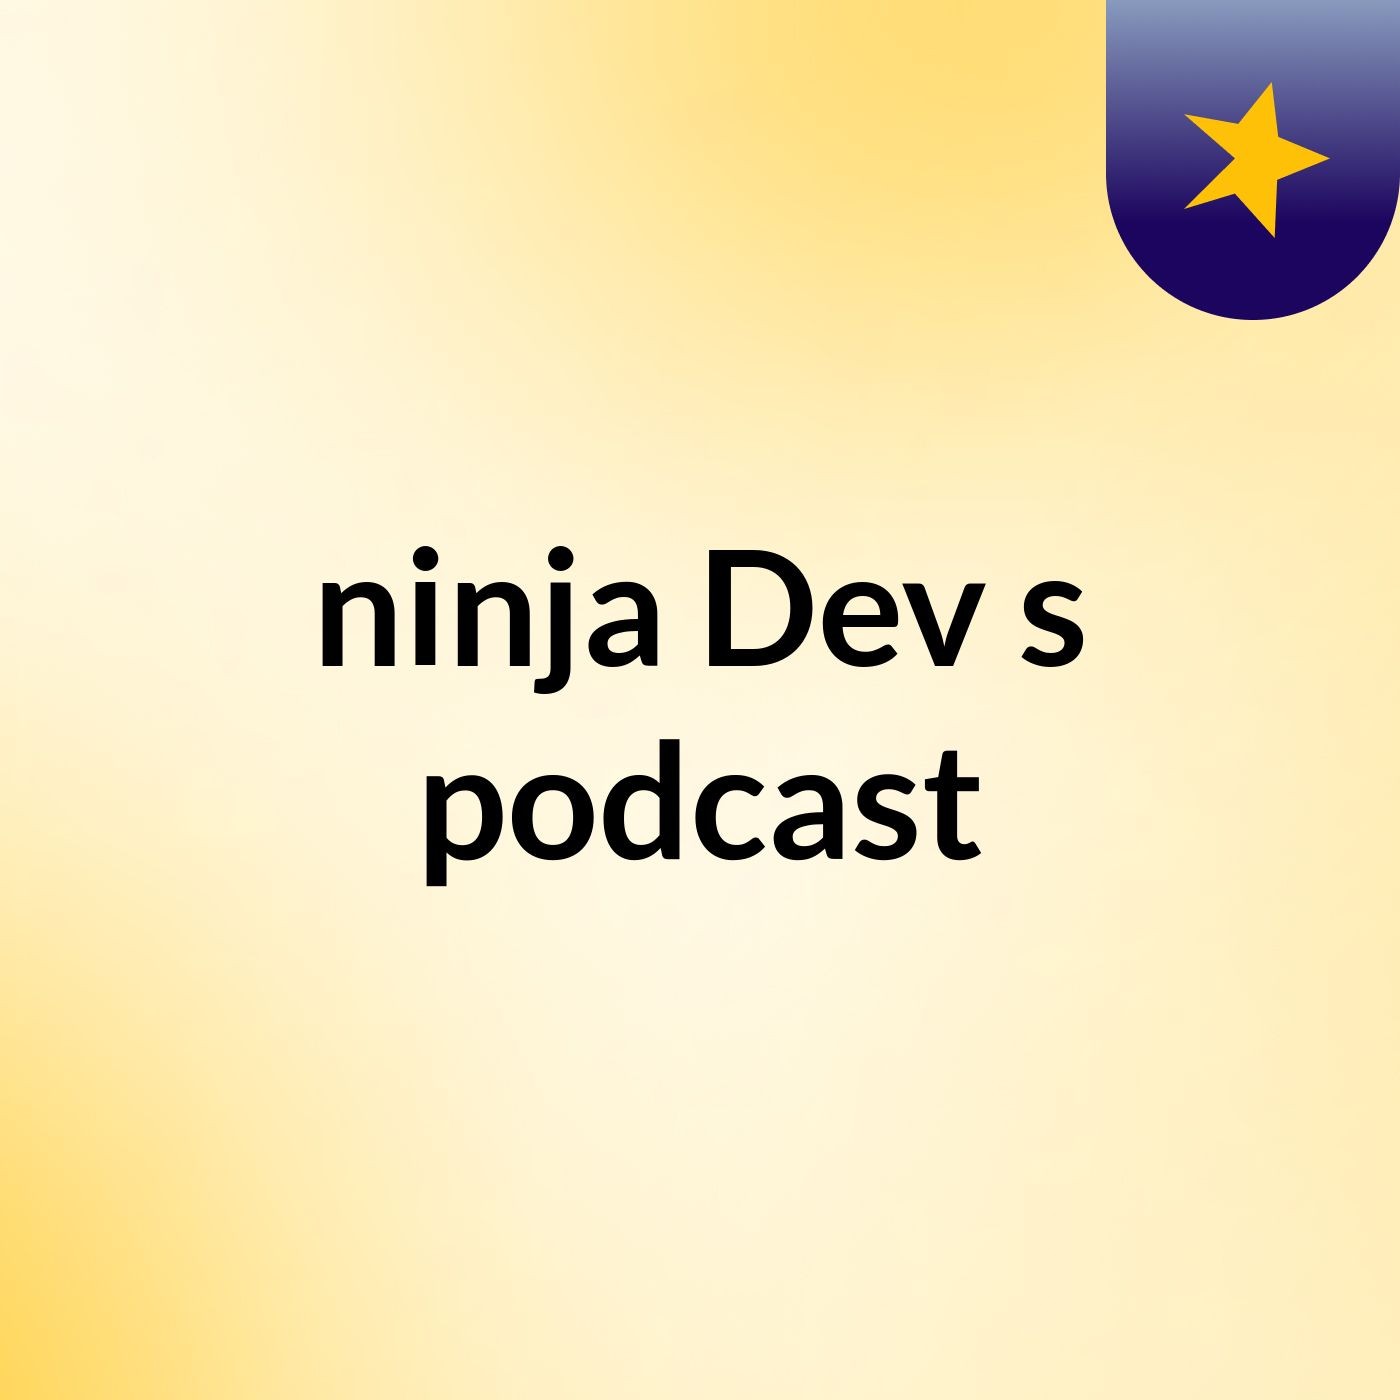 ninja Dev's podcast